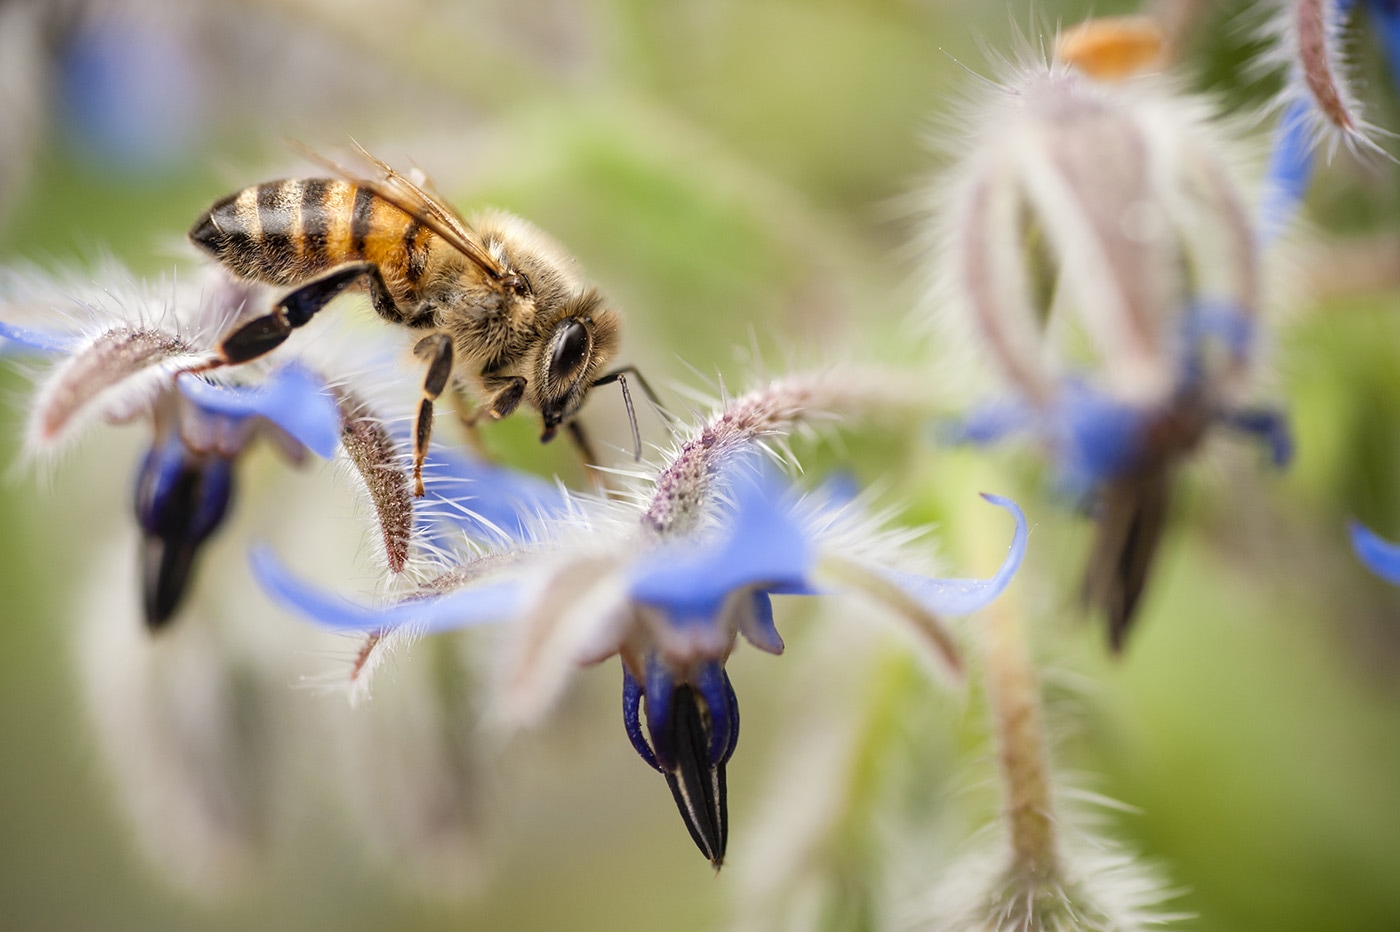 insect-on-flower-envato-bees-backyard-habitat-wildlife